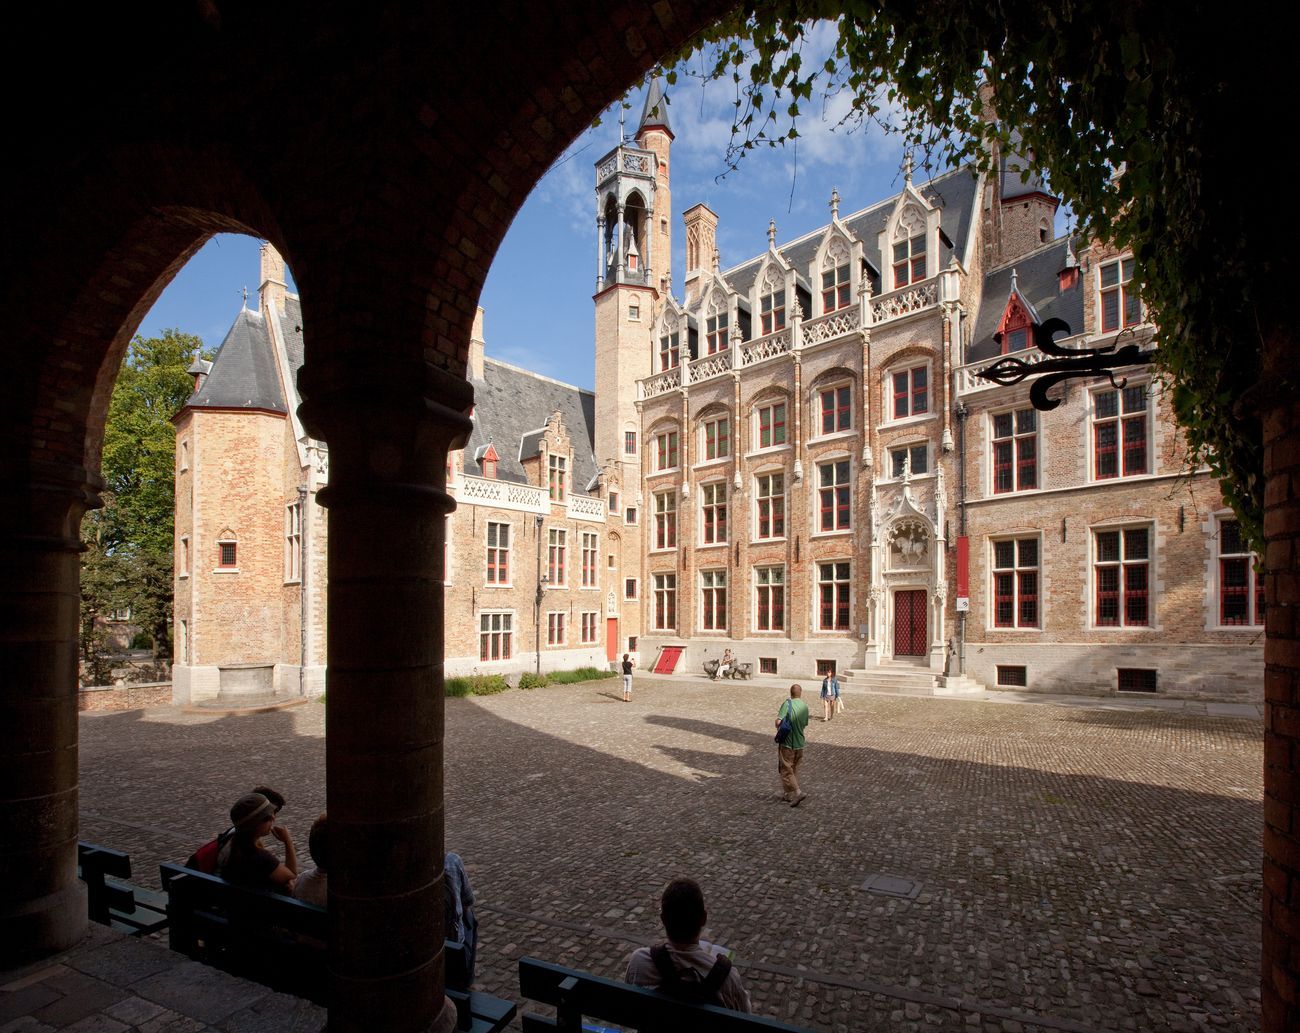 Gruuthusemuseum, Bruges. Photo © Stad Brugge